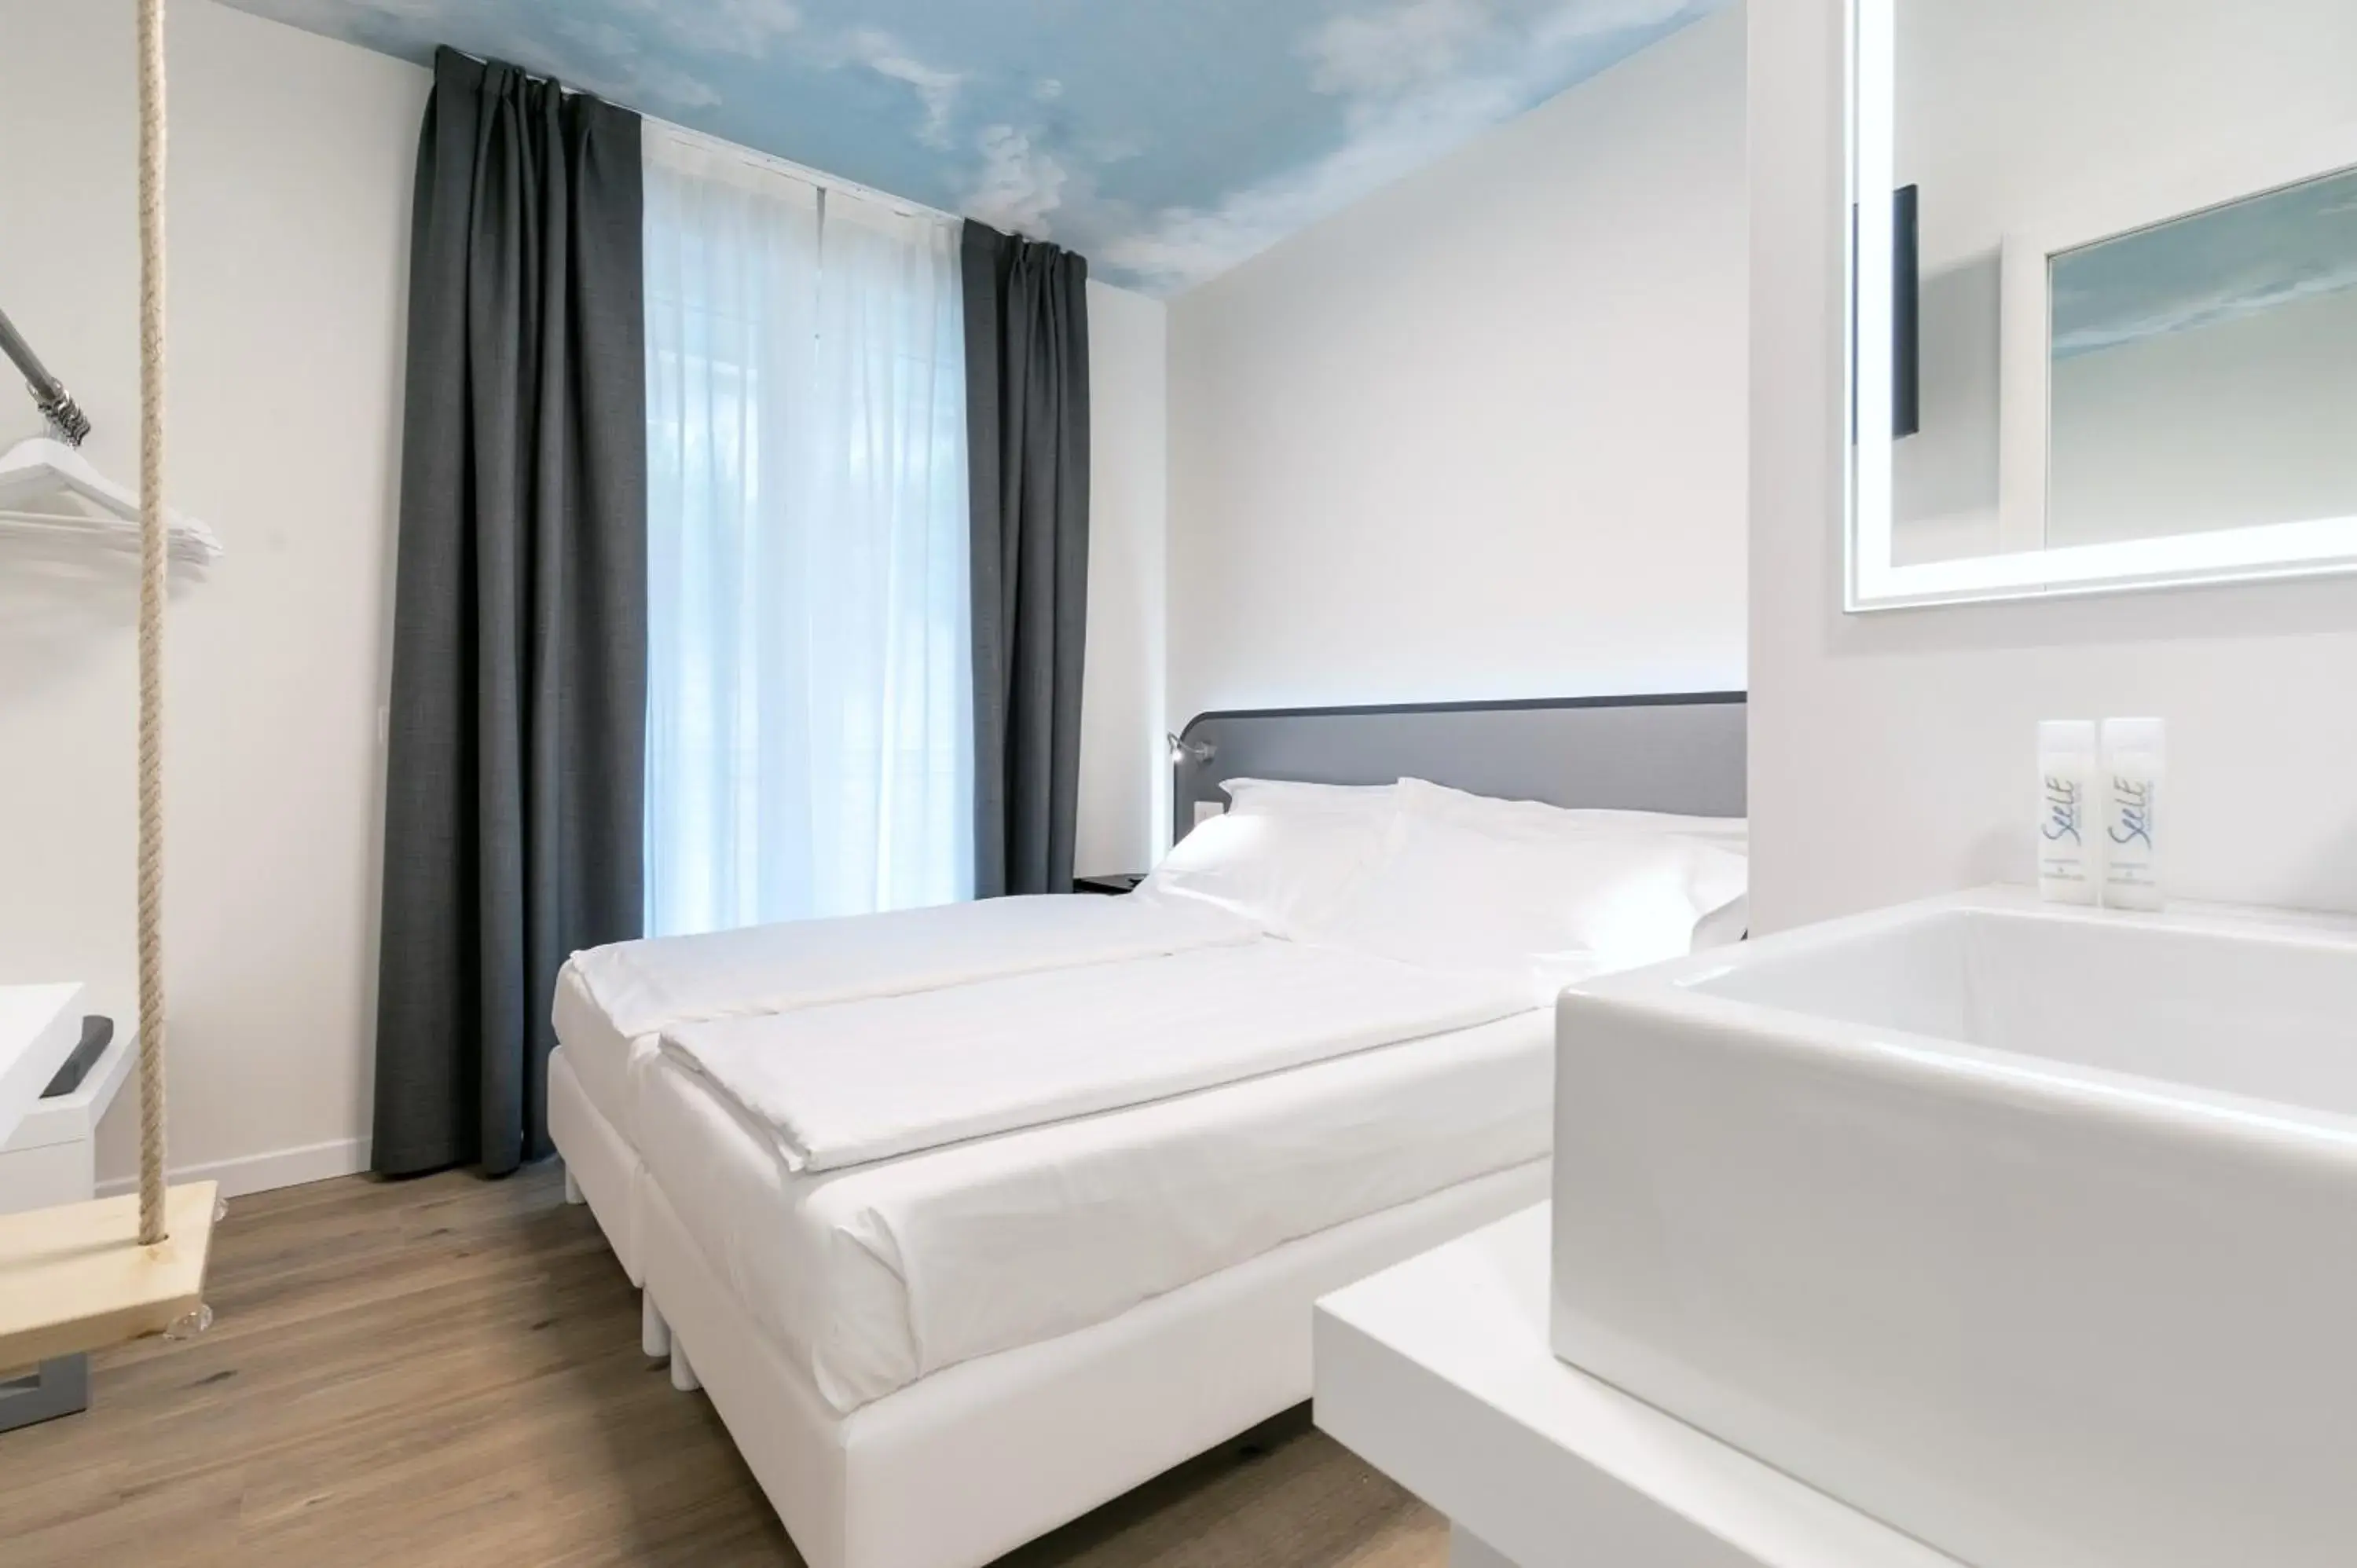 Bed in SeeLE Garda Hotel